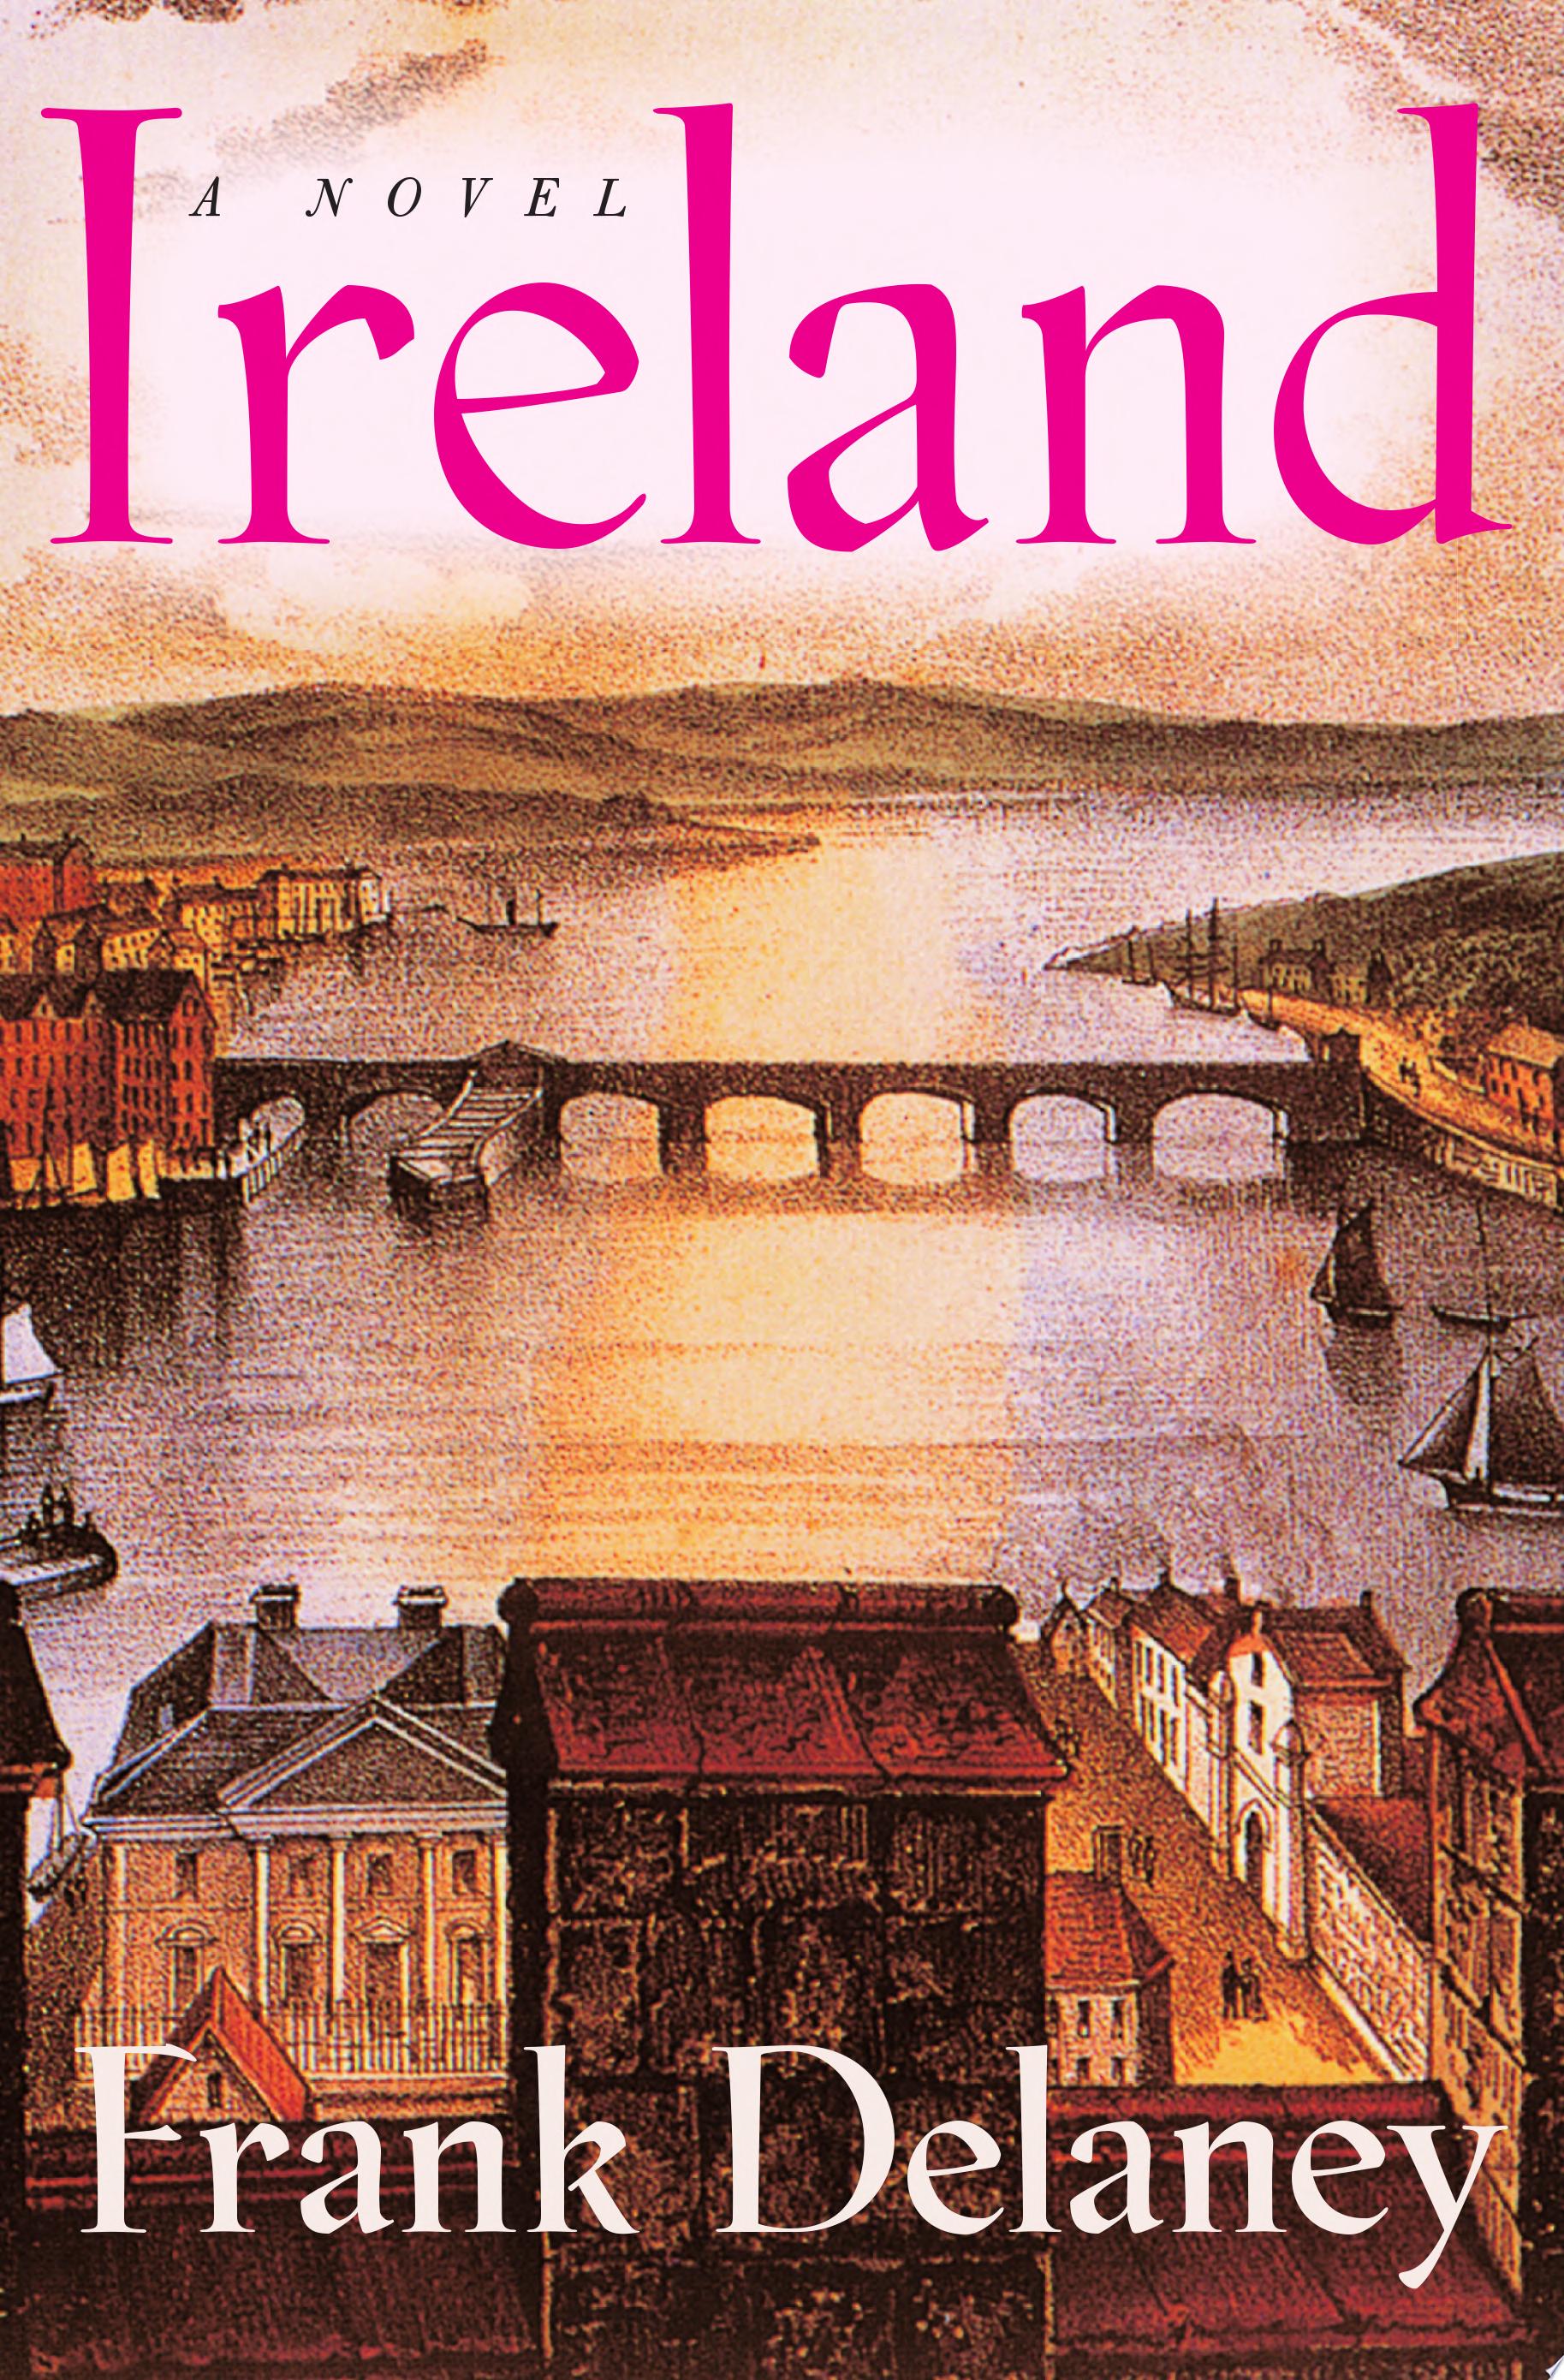 Image for "Ireland"